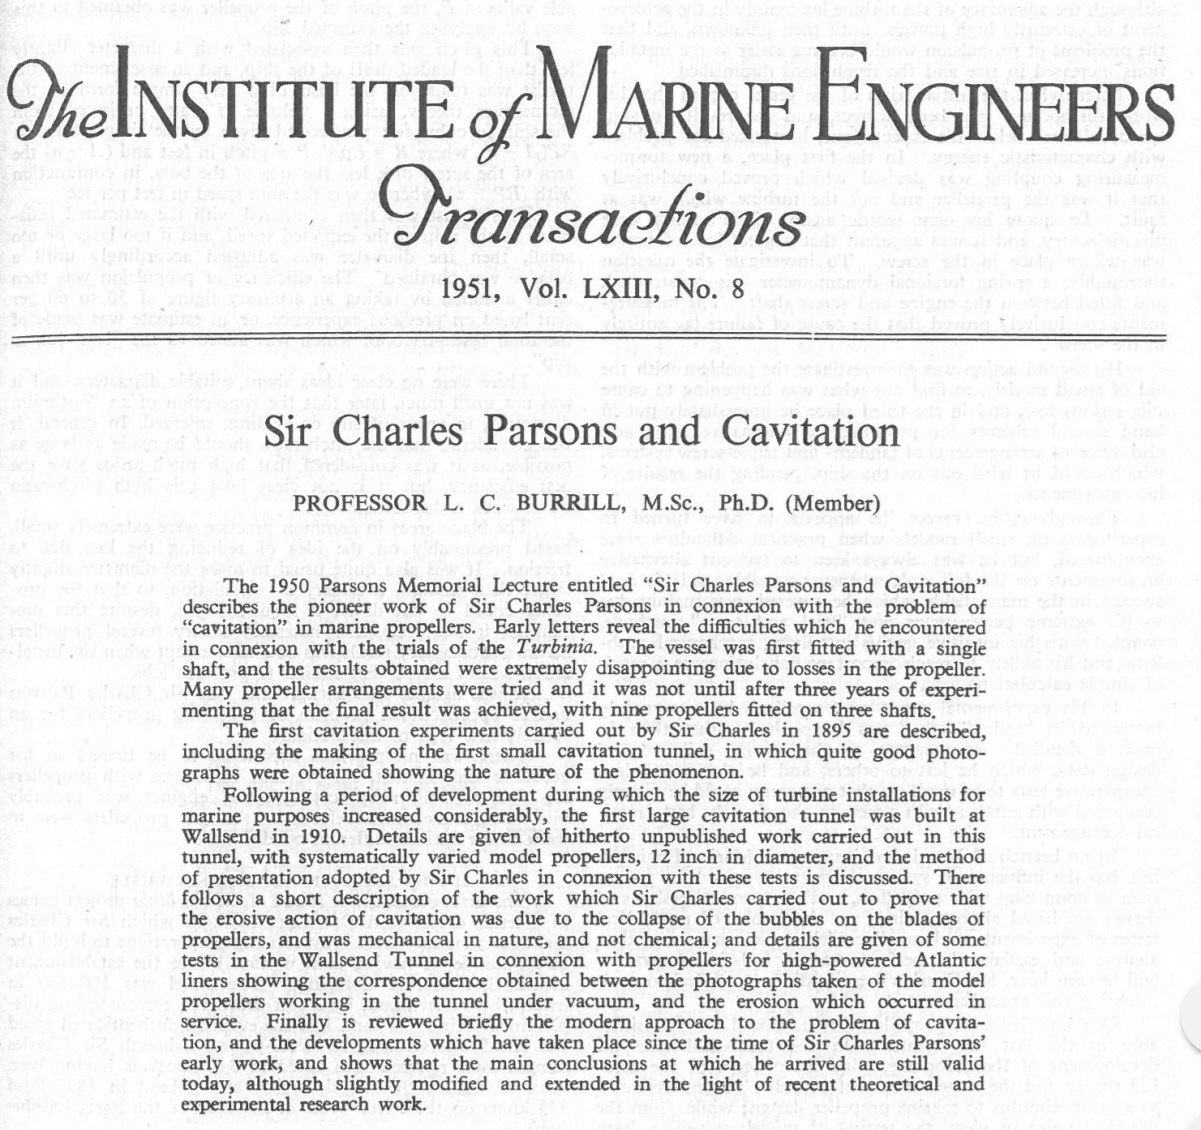 Sir Charles Parsons and Cavitation